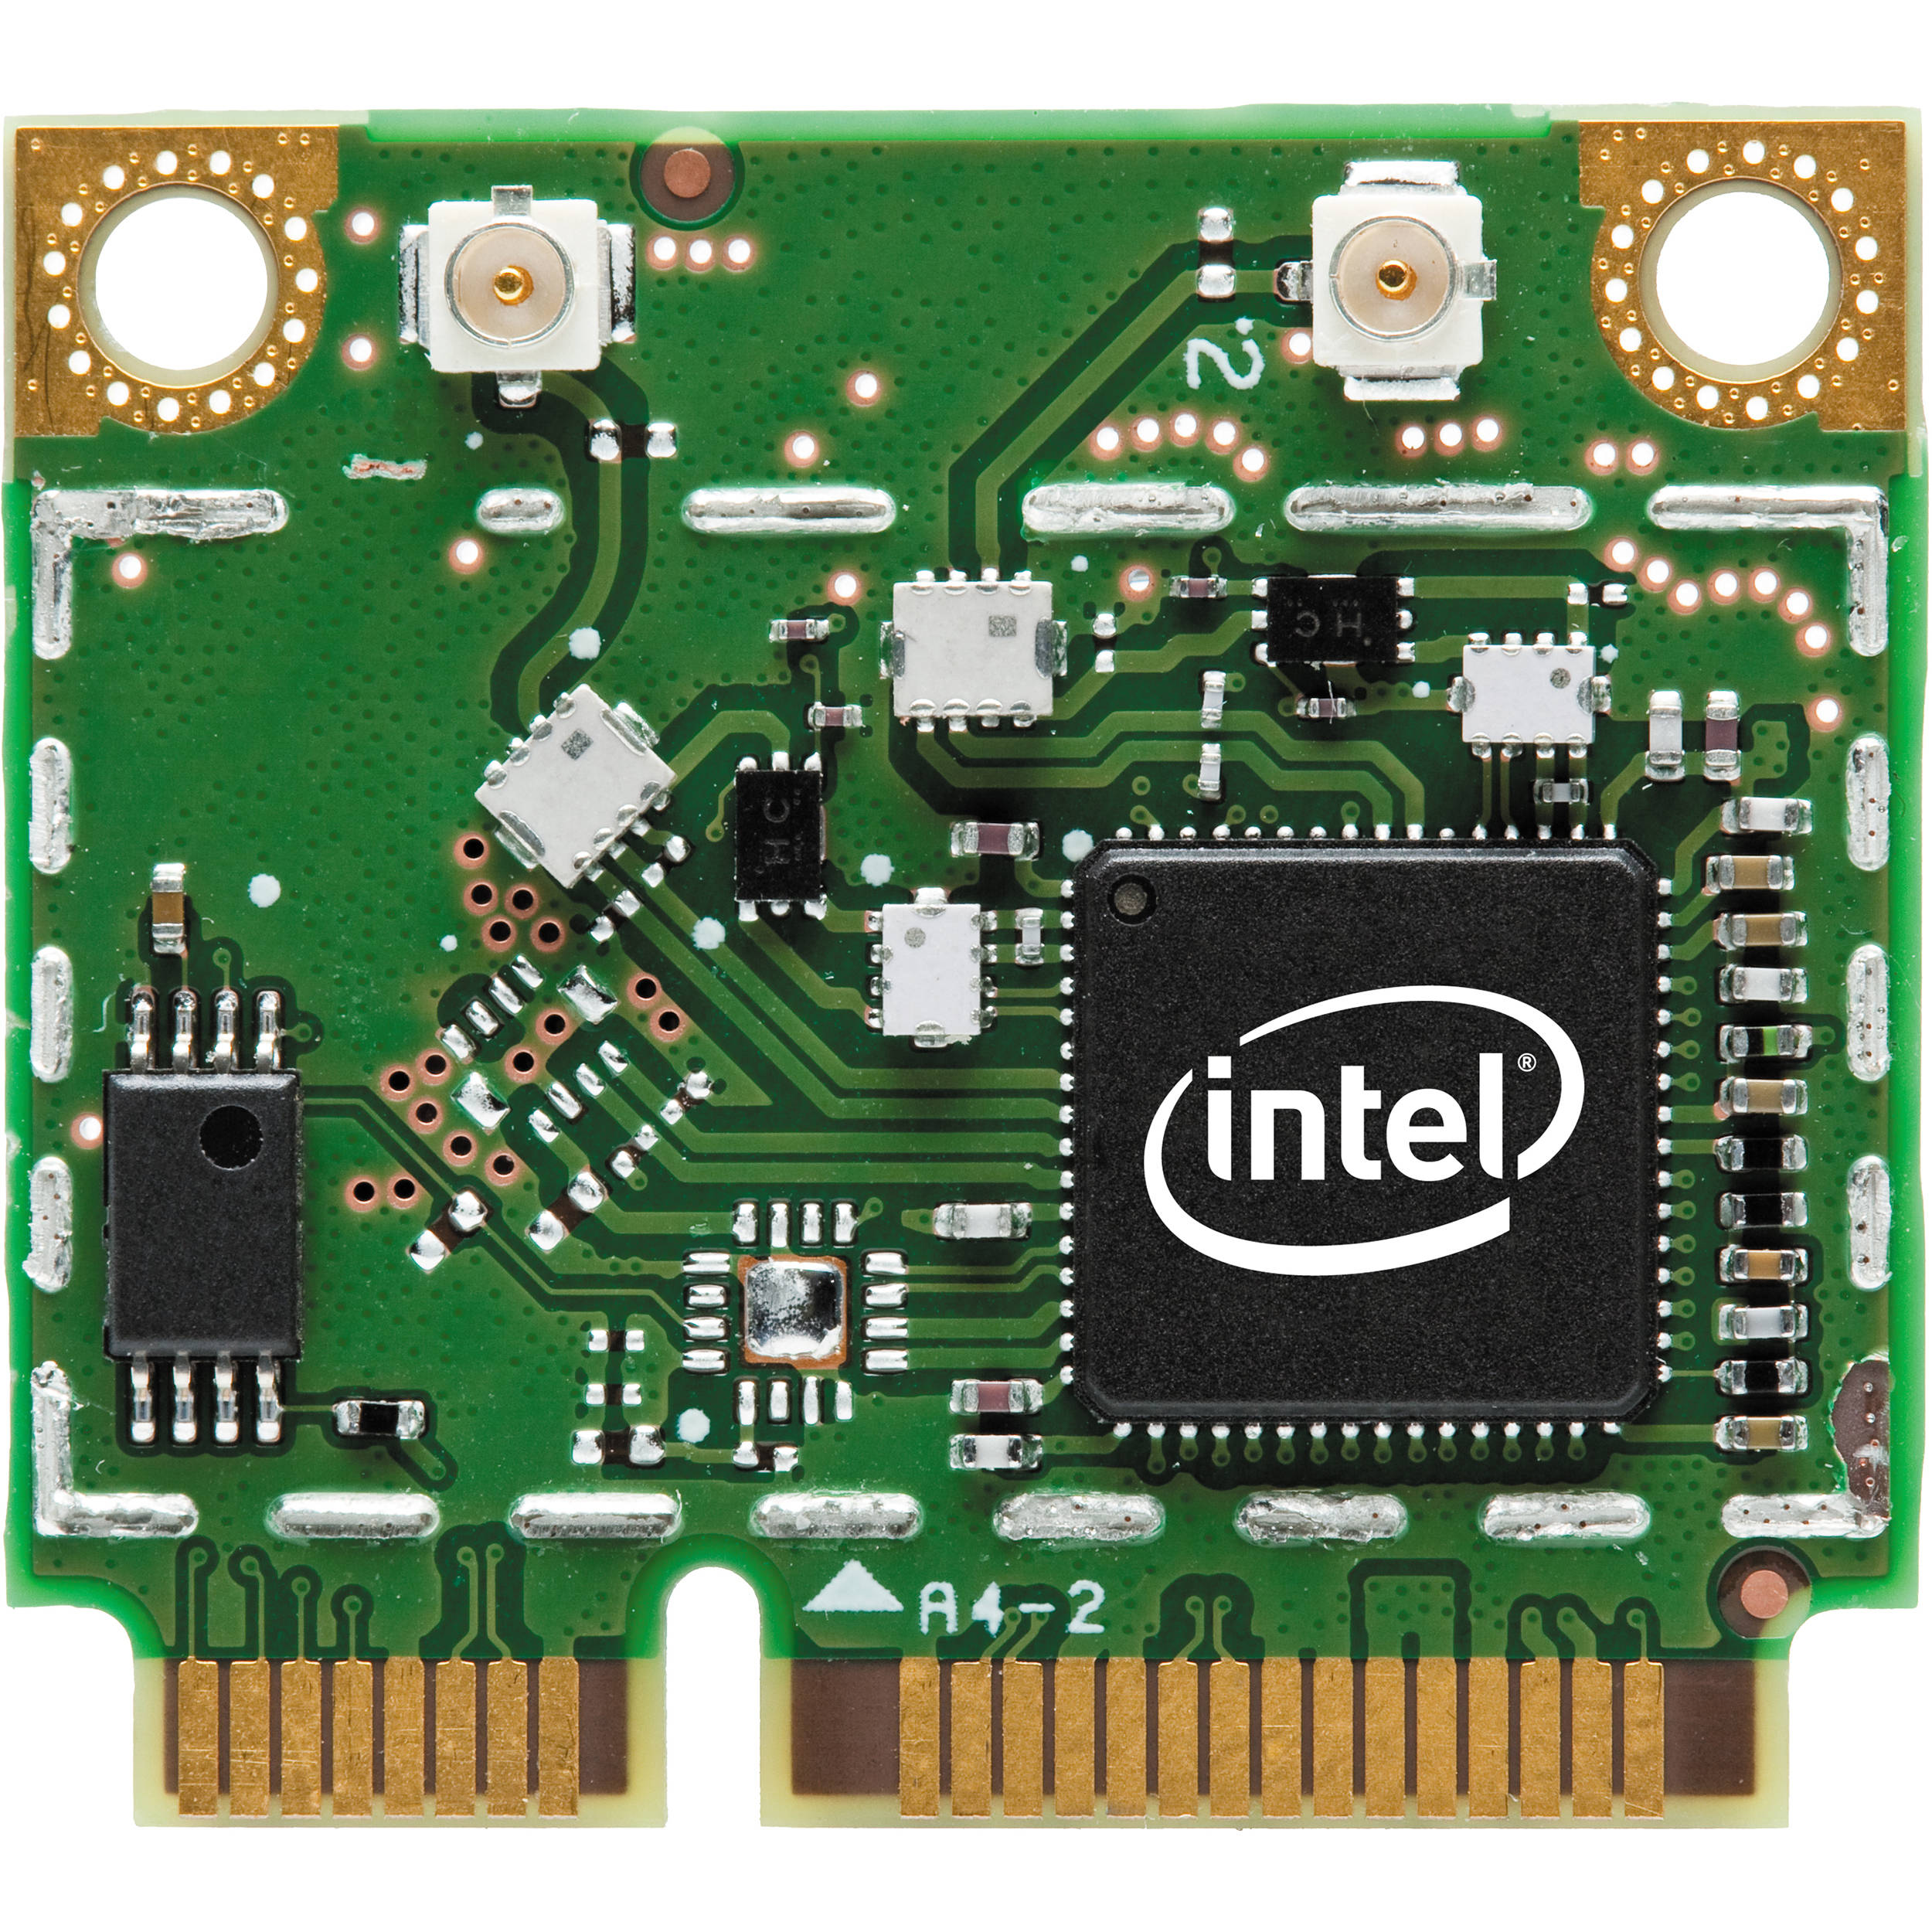 Intel centrino advanced-n 6235 driver update